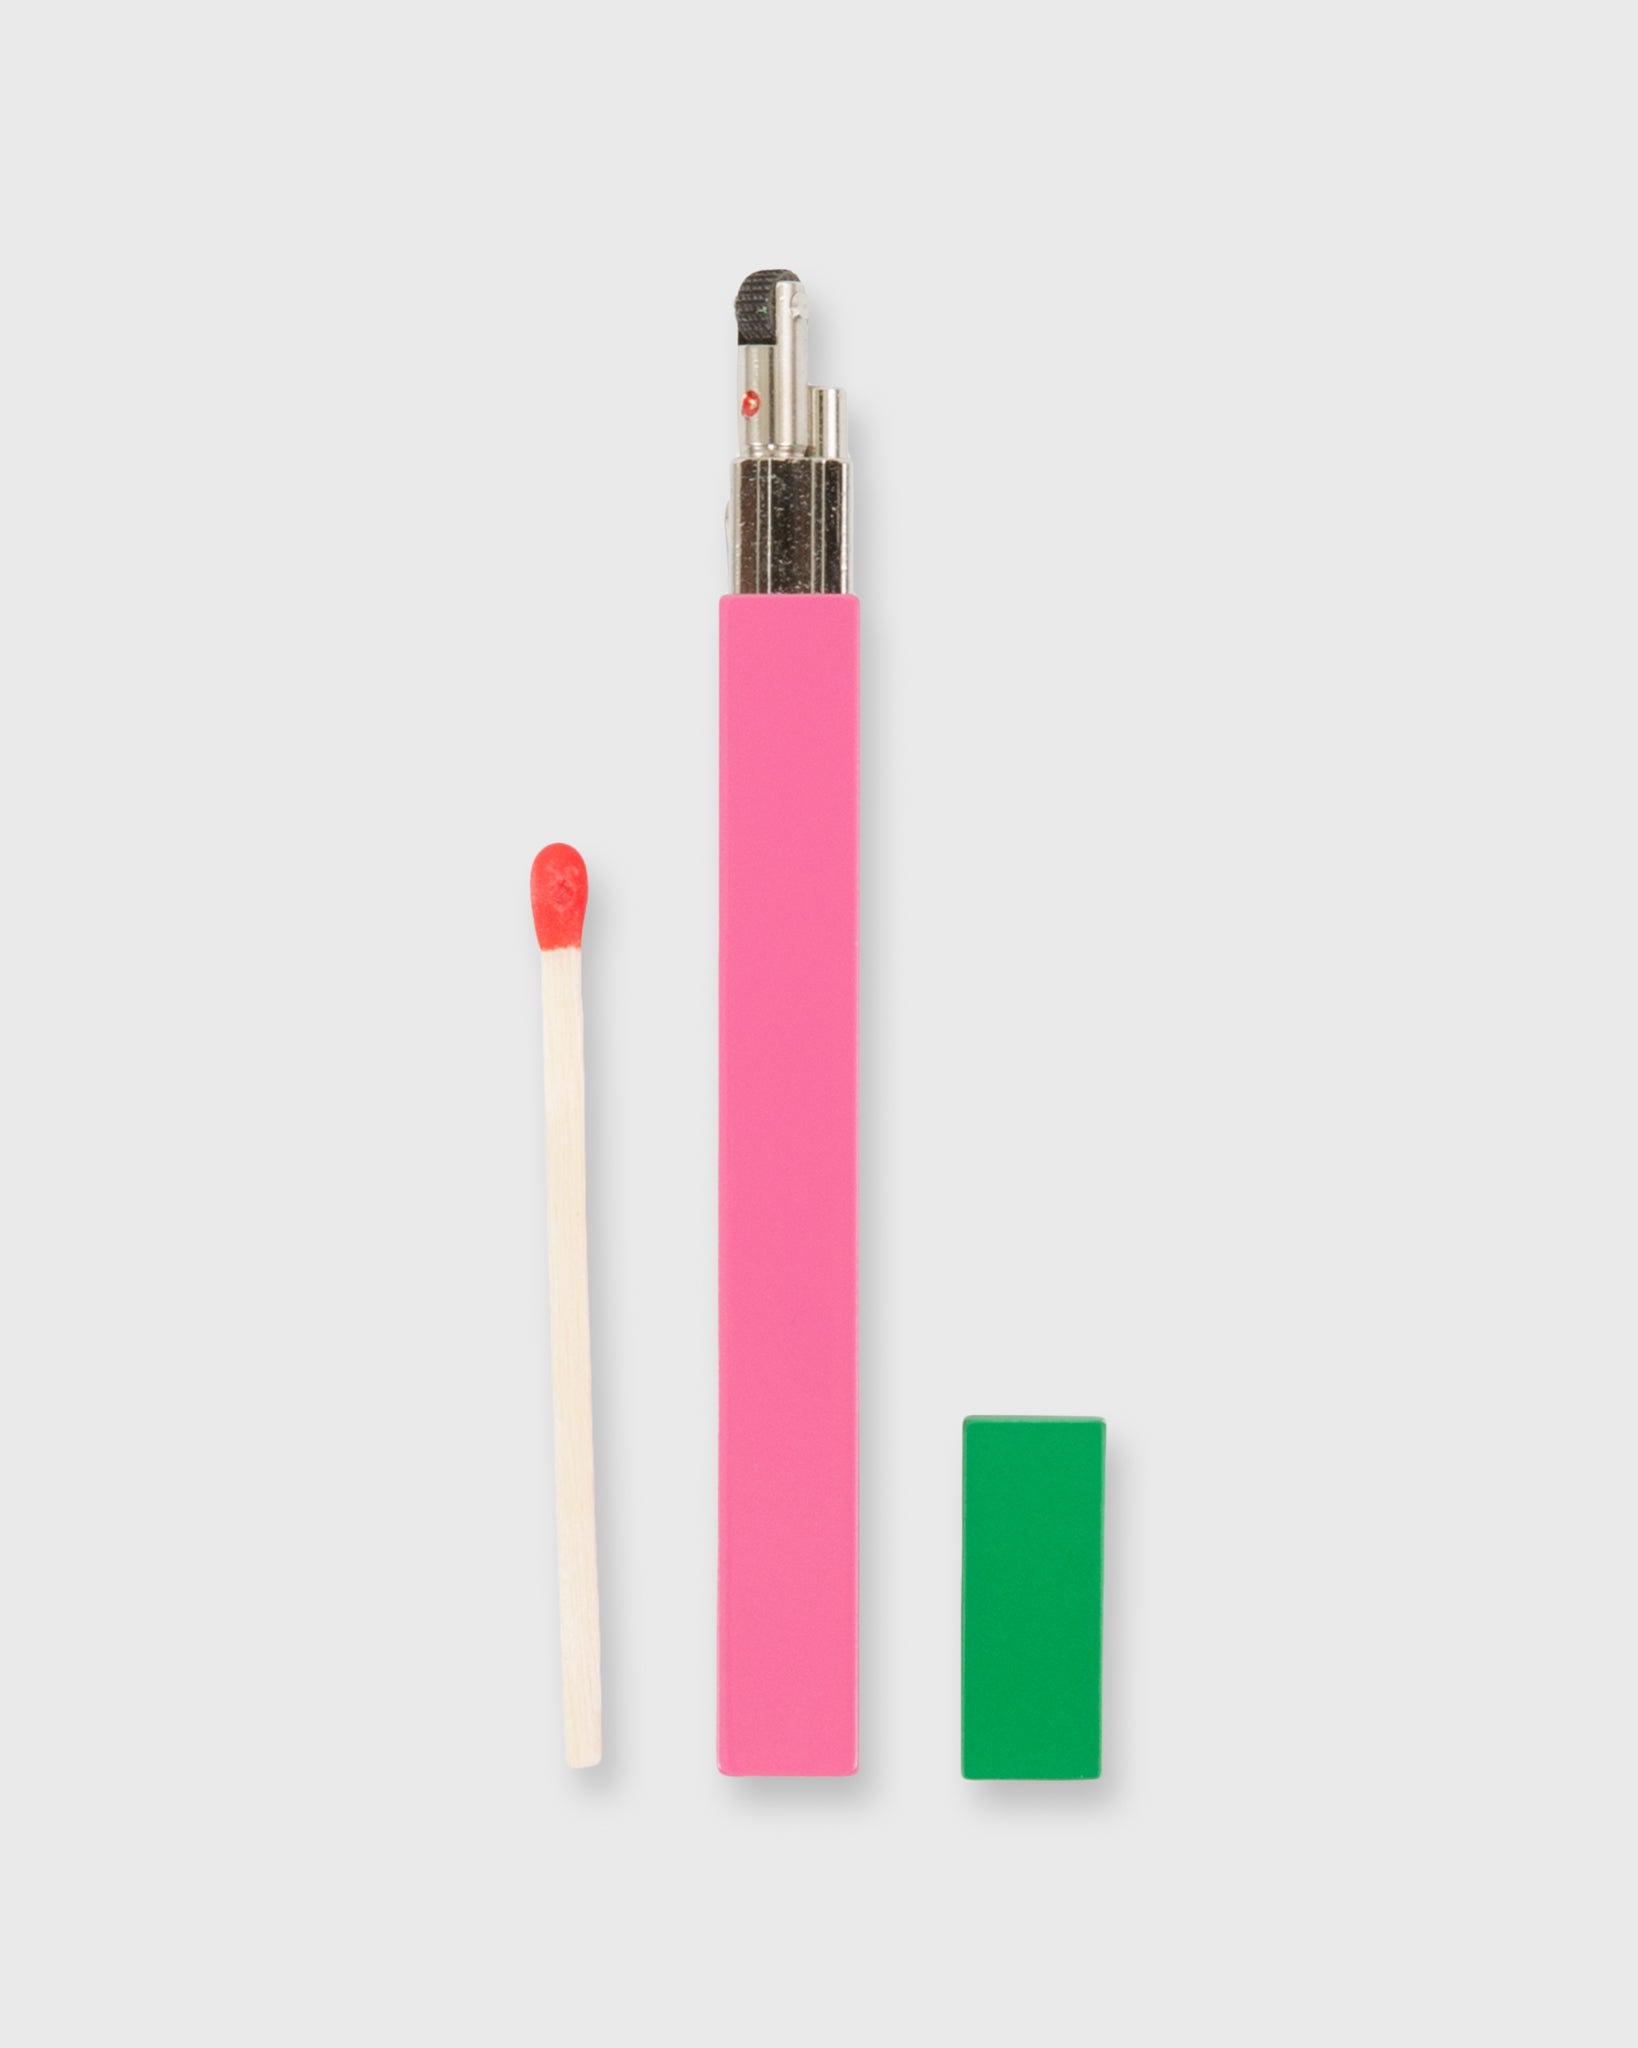 Queue Slim Stick Lighter Pink/Green